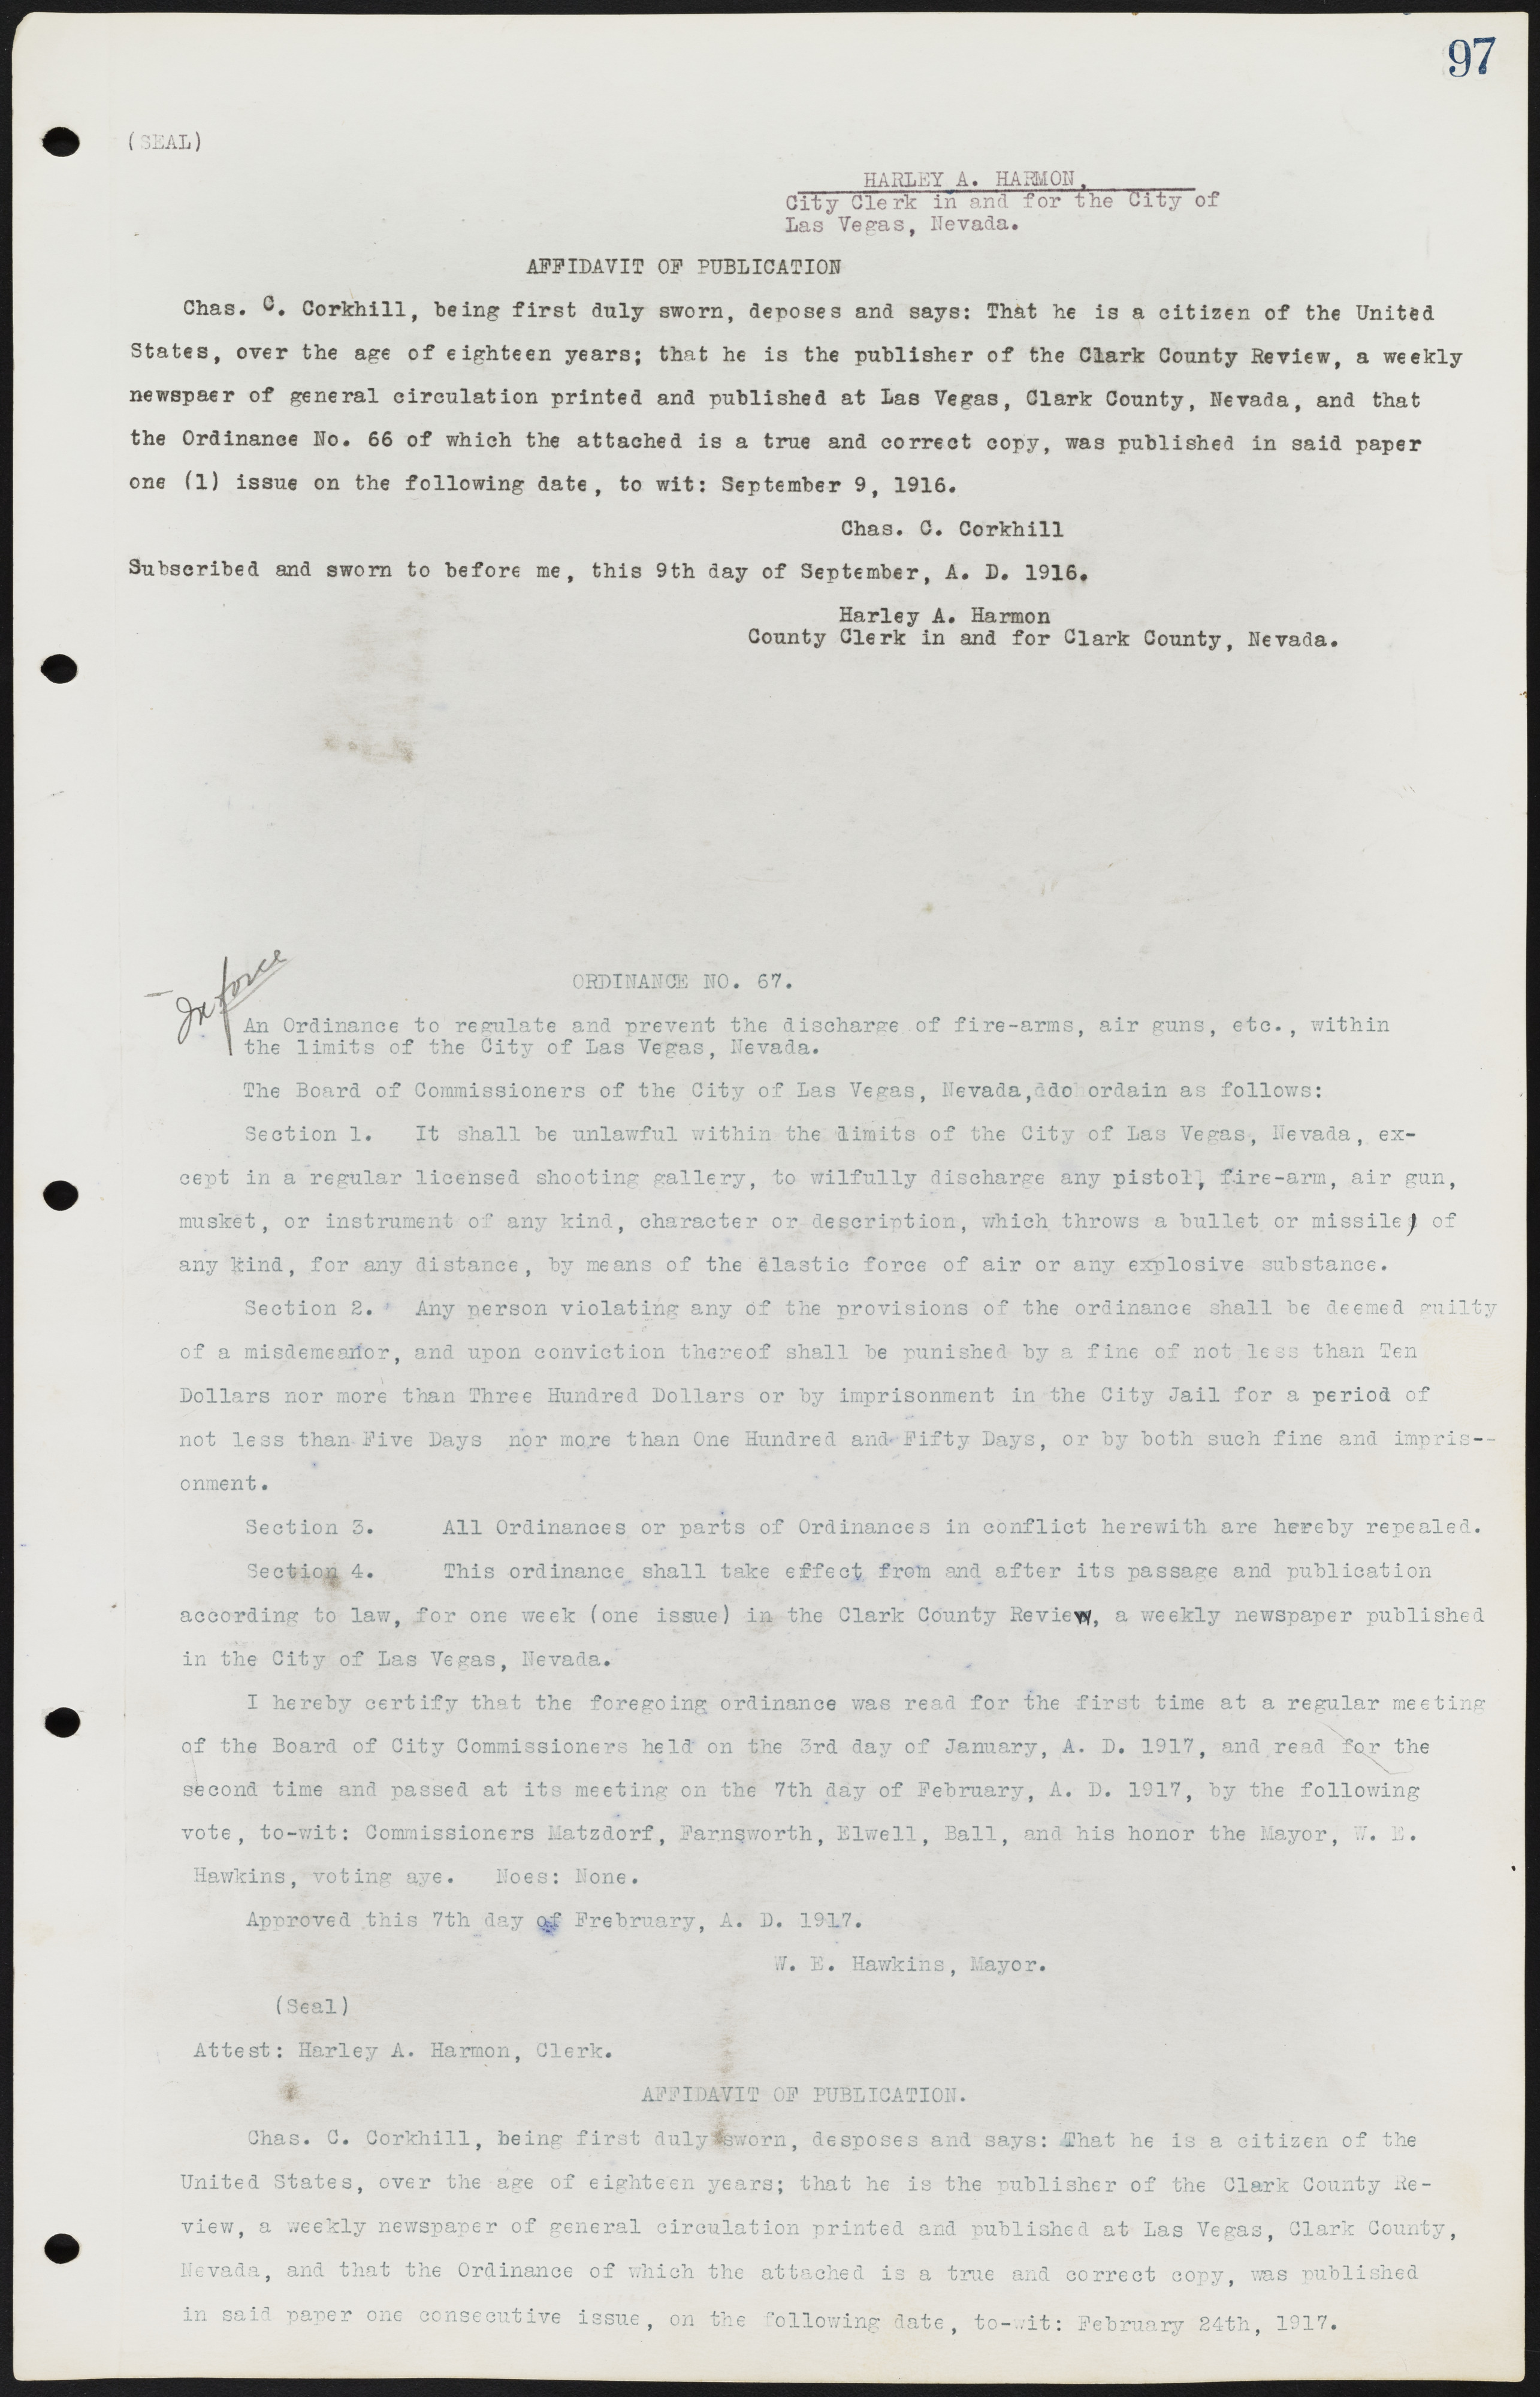 Las Vegas City Ordinances, July 18, 1911 to March 31, 1933, lvc000013-101